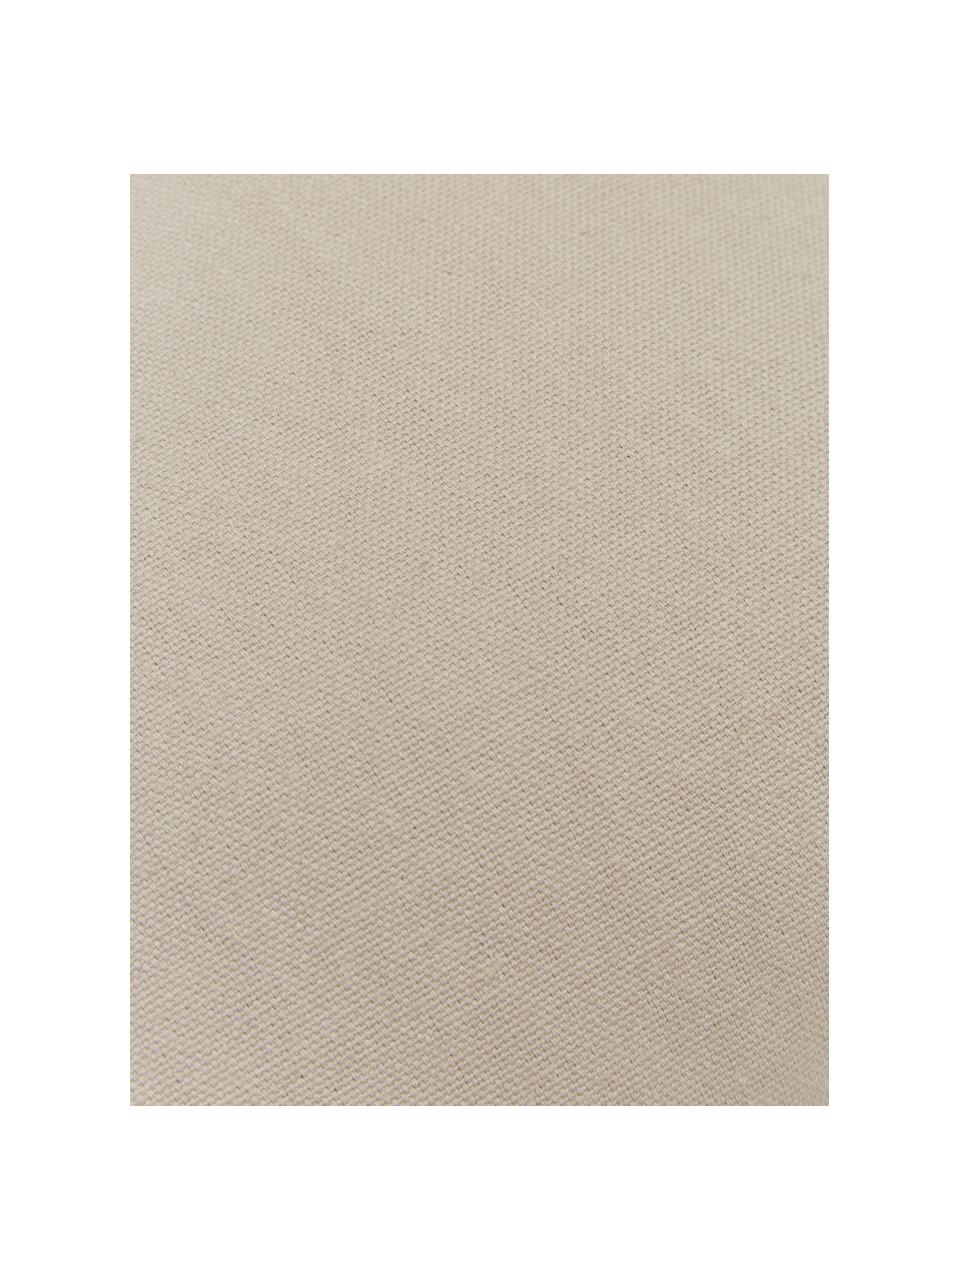 Cuscino a maglia grossa color beige Sparkle, Rivestimento: 100% cotone, Beige, Larg. 45 x Lung. 45 cm